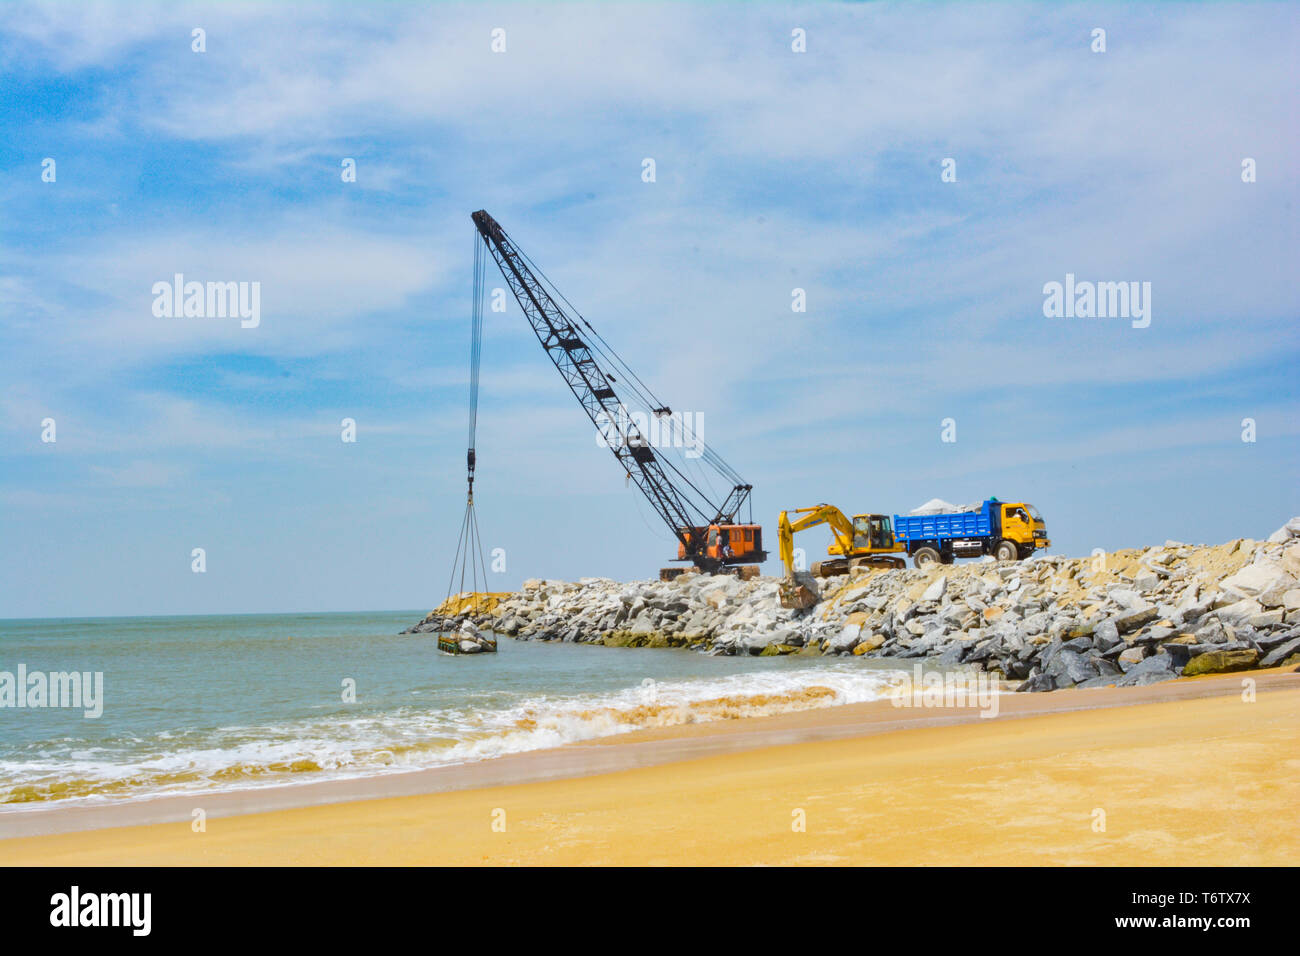 Udupi, India - NOVEMBER 11 2017: Industrial crane working in the coastal area Stock Photo